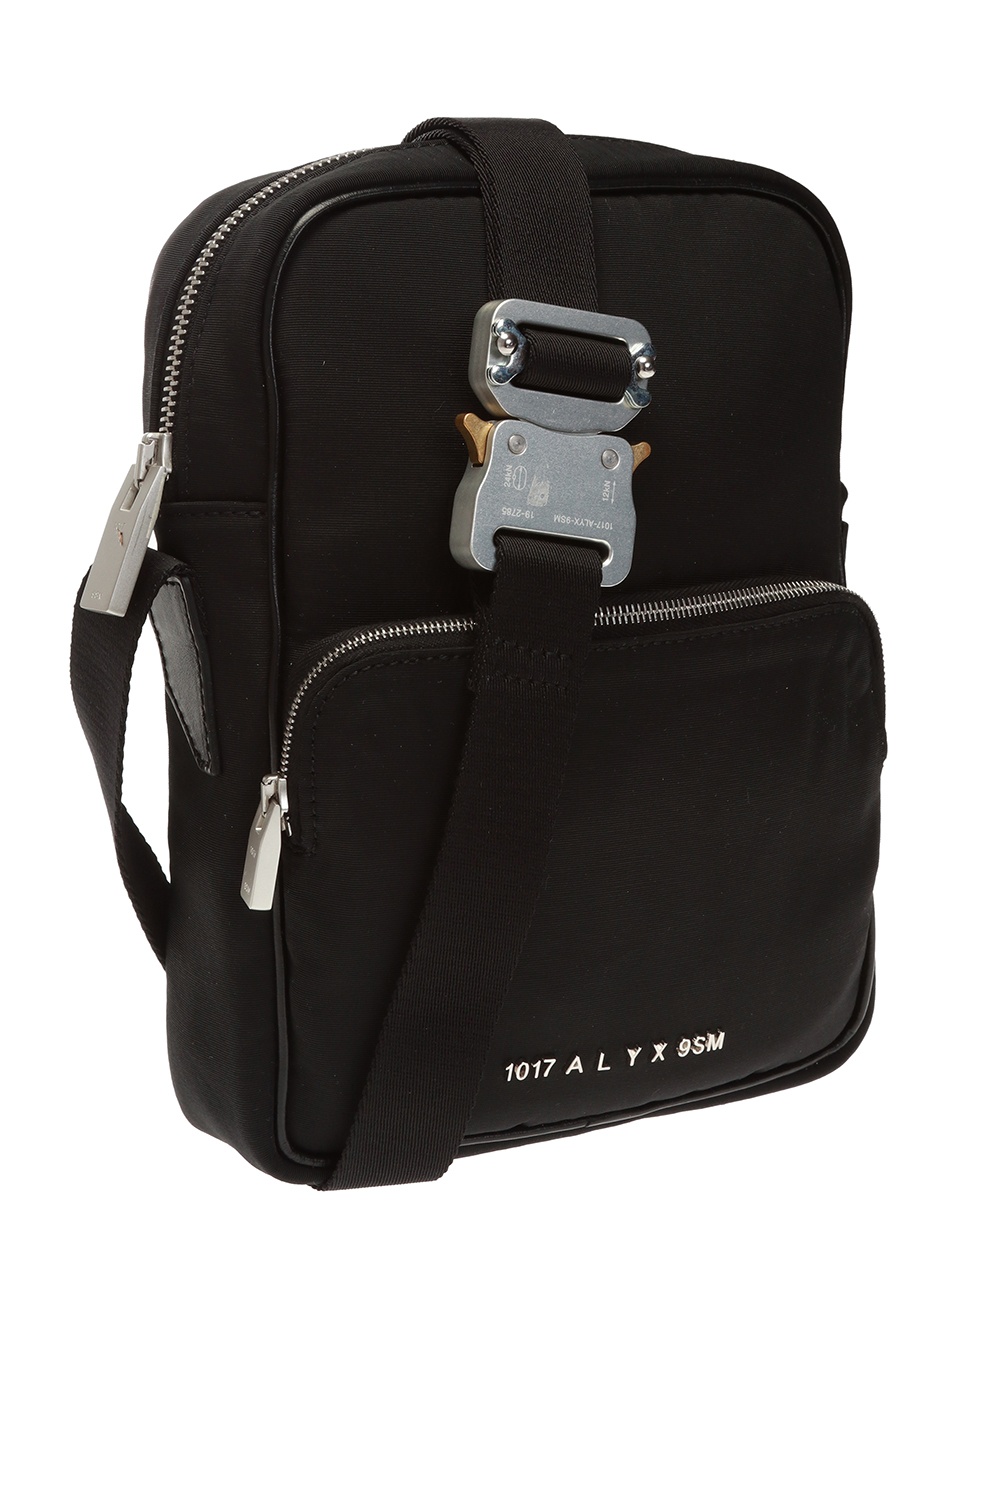 IetpShops | 1017 ALYX 9SM Shoulder bag with logo | Men's Bags 